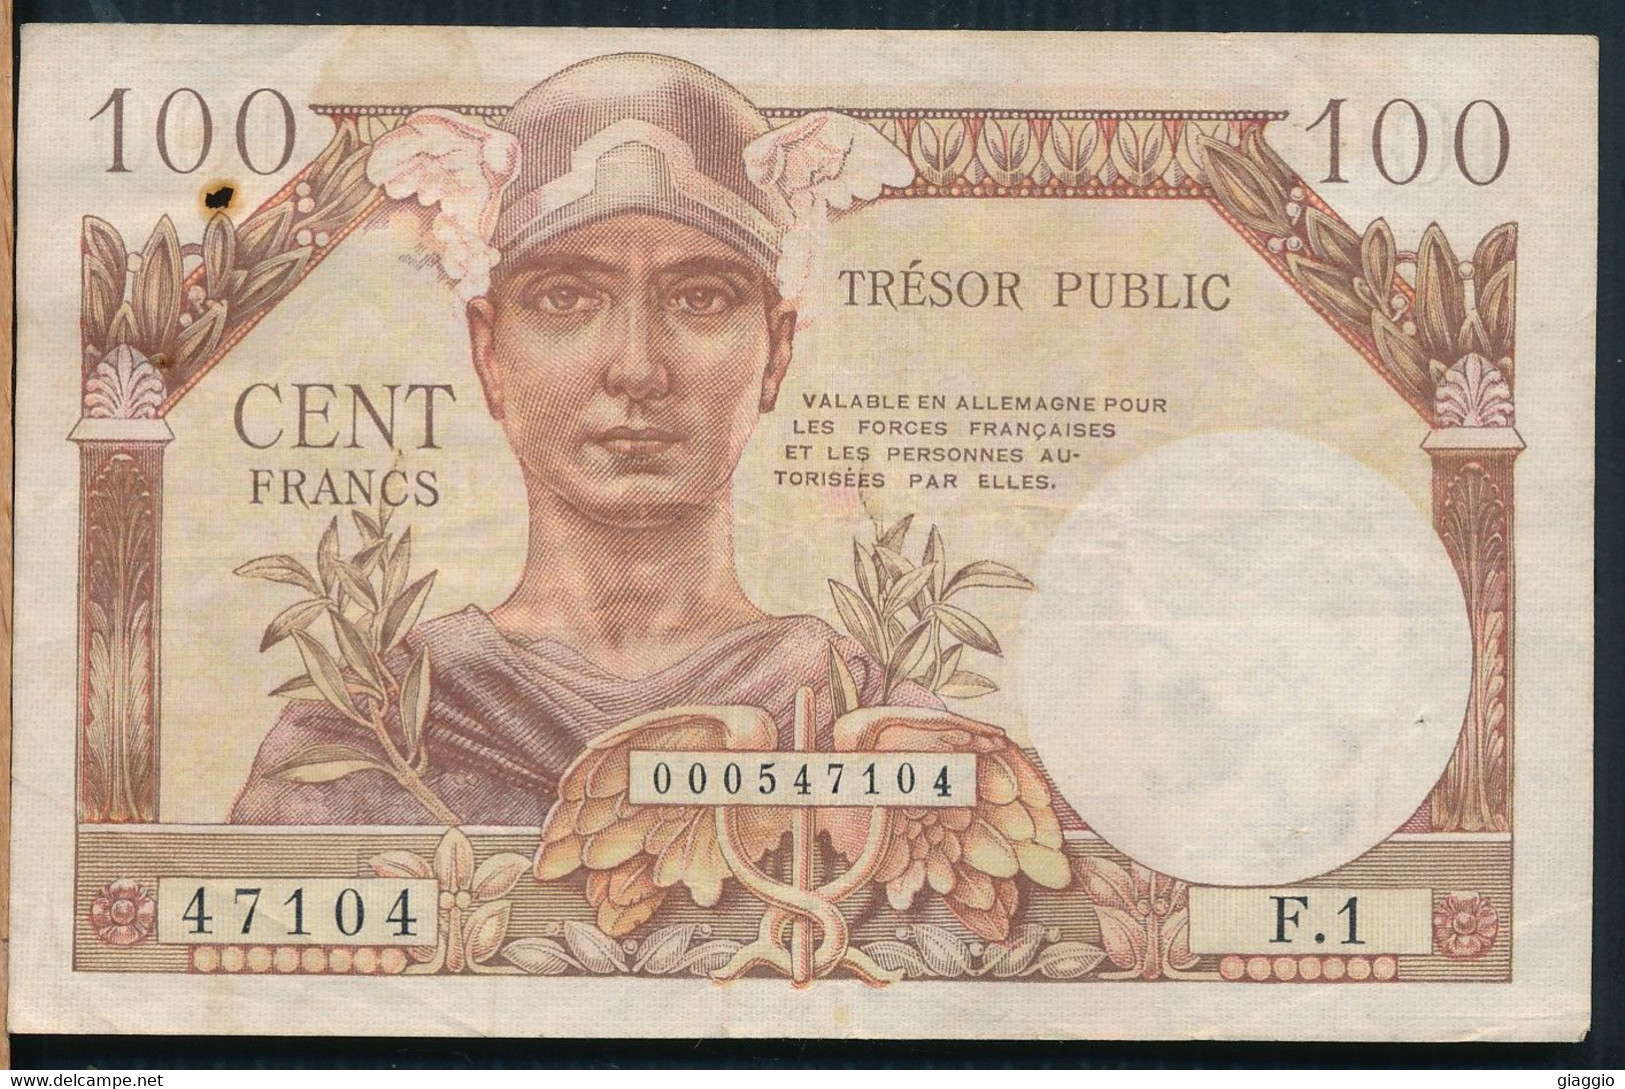 °°° FRANCE - 100 TRESOR PUBLIC °°° - 1955-1963 Tesoro Público